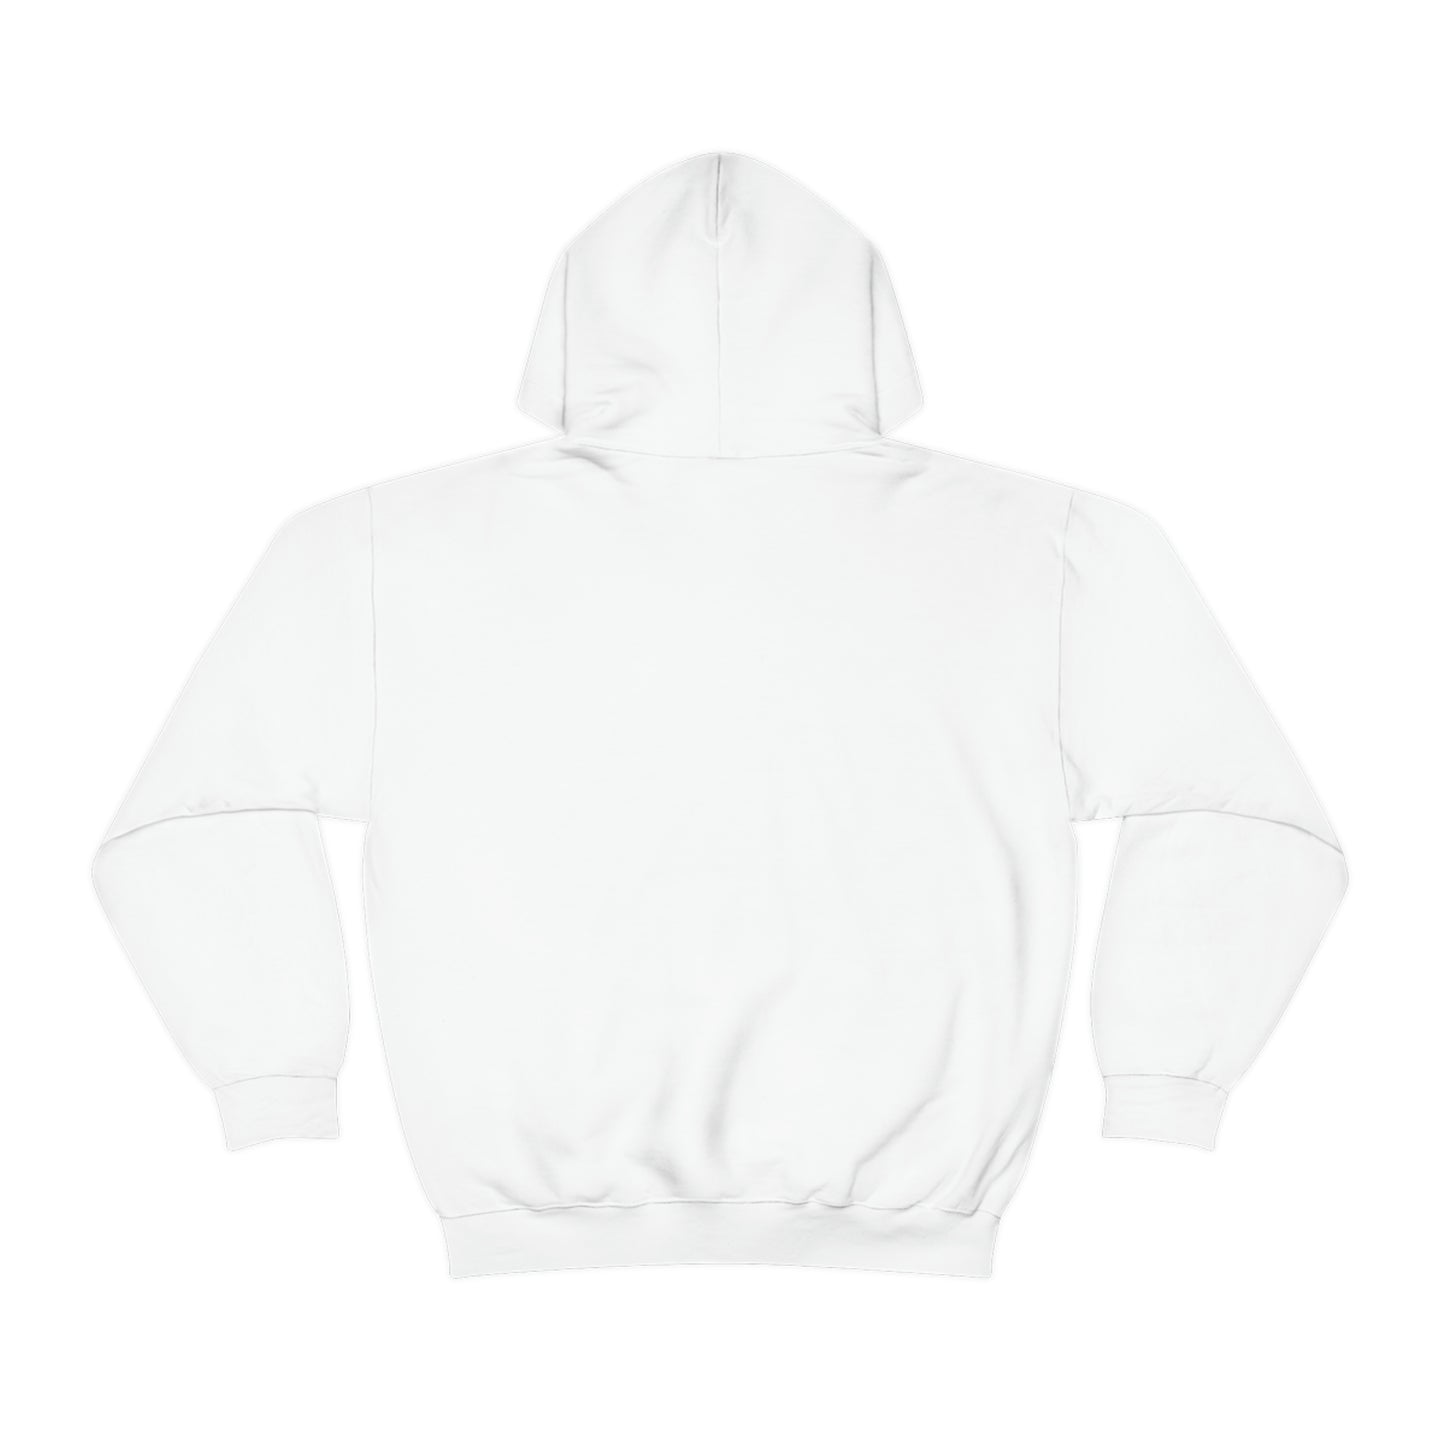 Adultistic [Redefined] Unisex Heavy Blend™ Hooded Sweatshirt